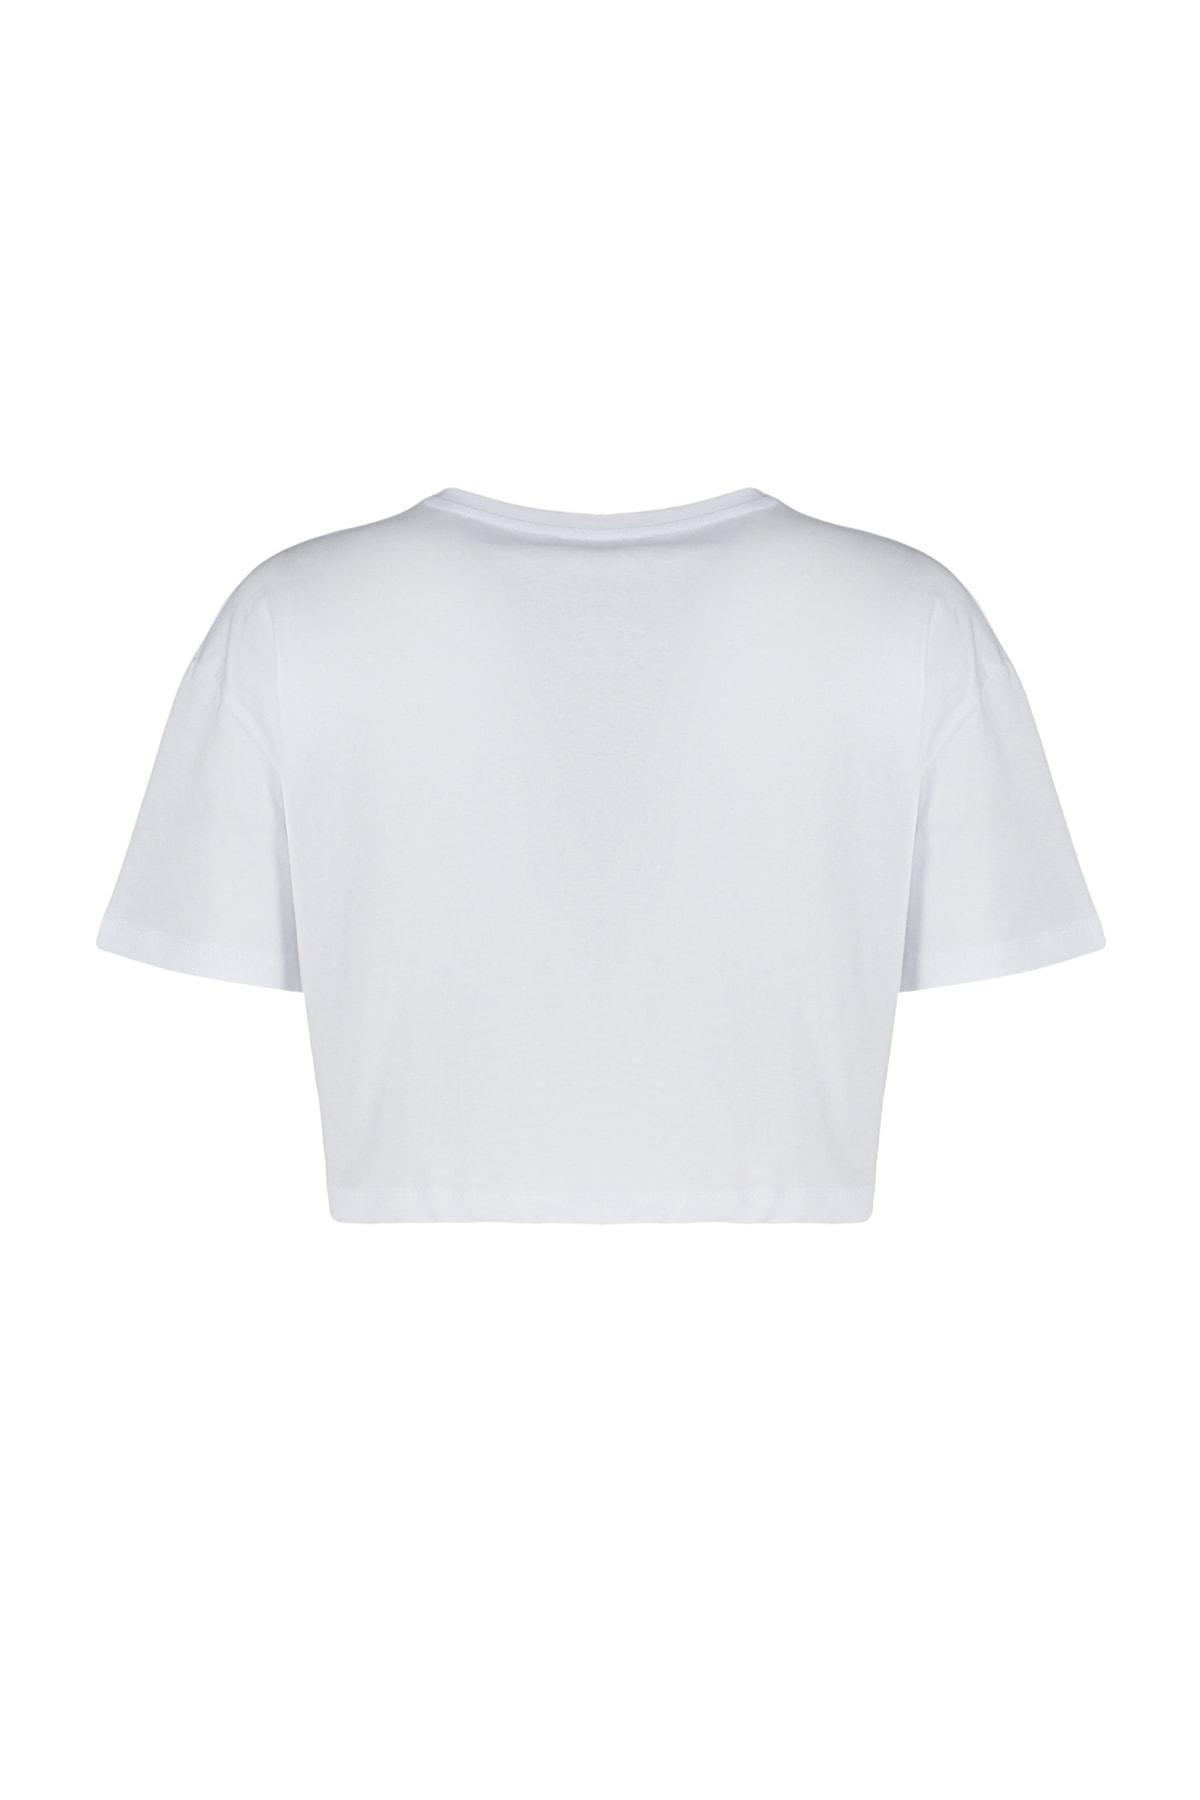 Trendyol - White Printed Crew Neck T-Shirt